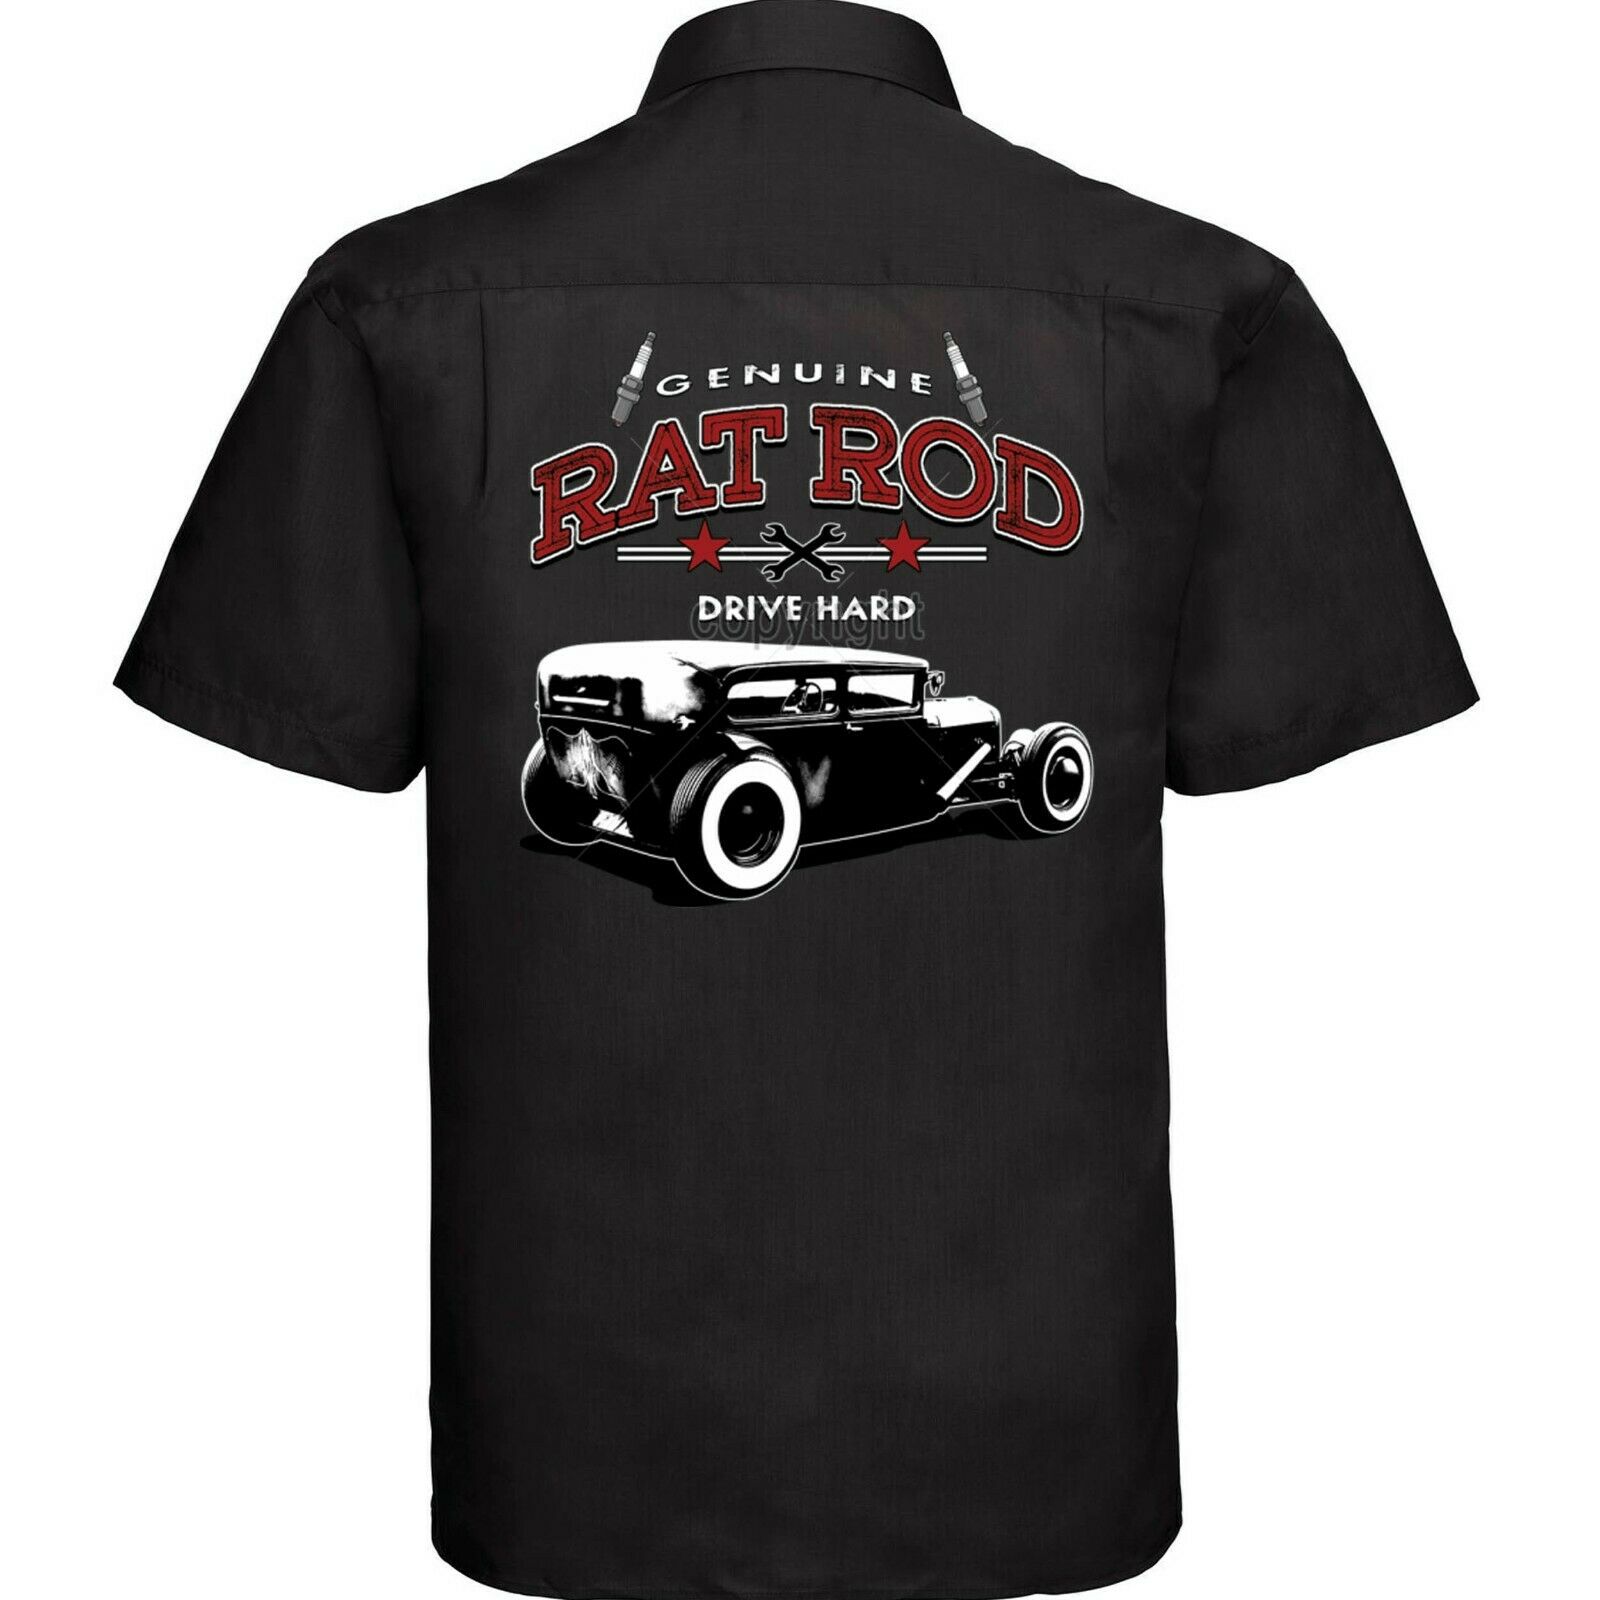 Hotrod 58 Garage Work Shirt American Rockabilly Hot Rat Rod V8 Car ...